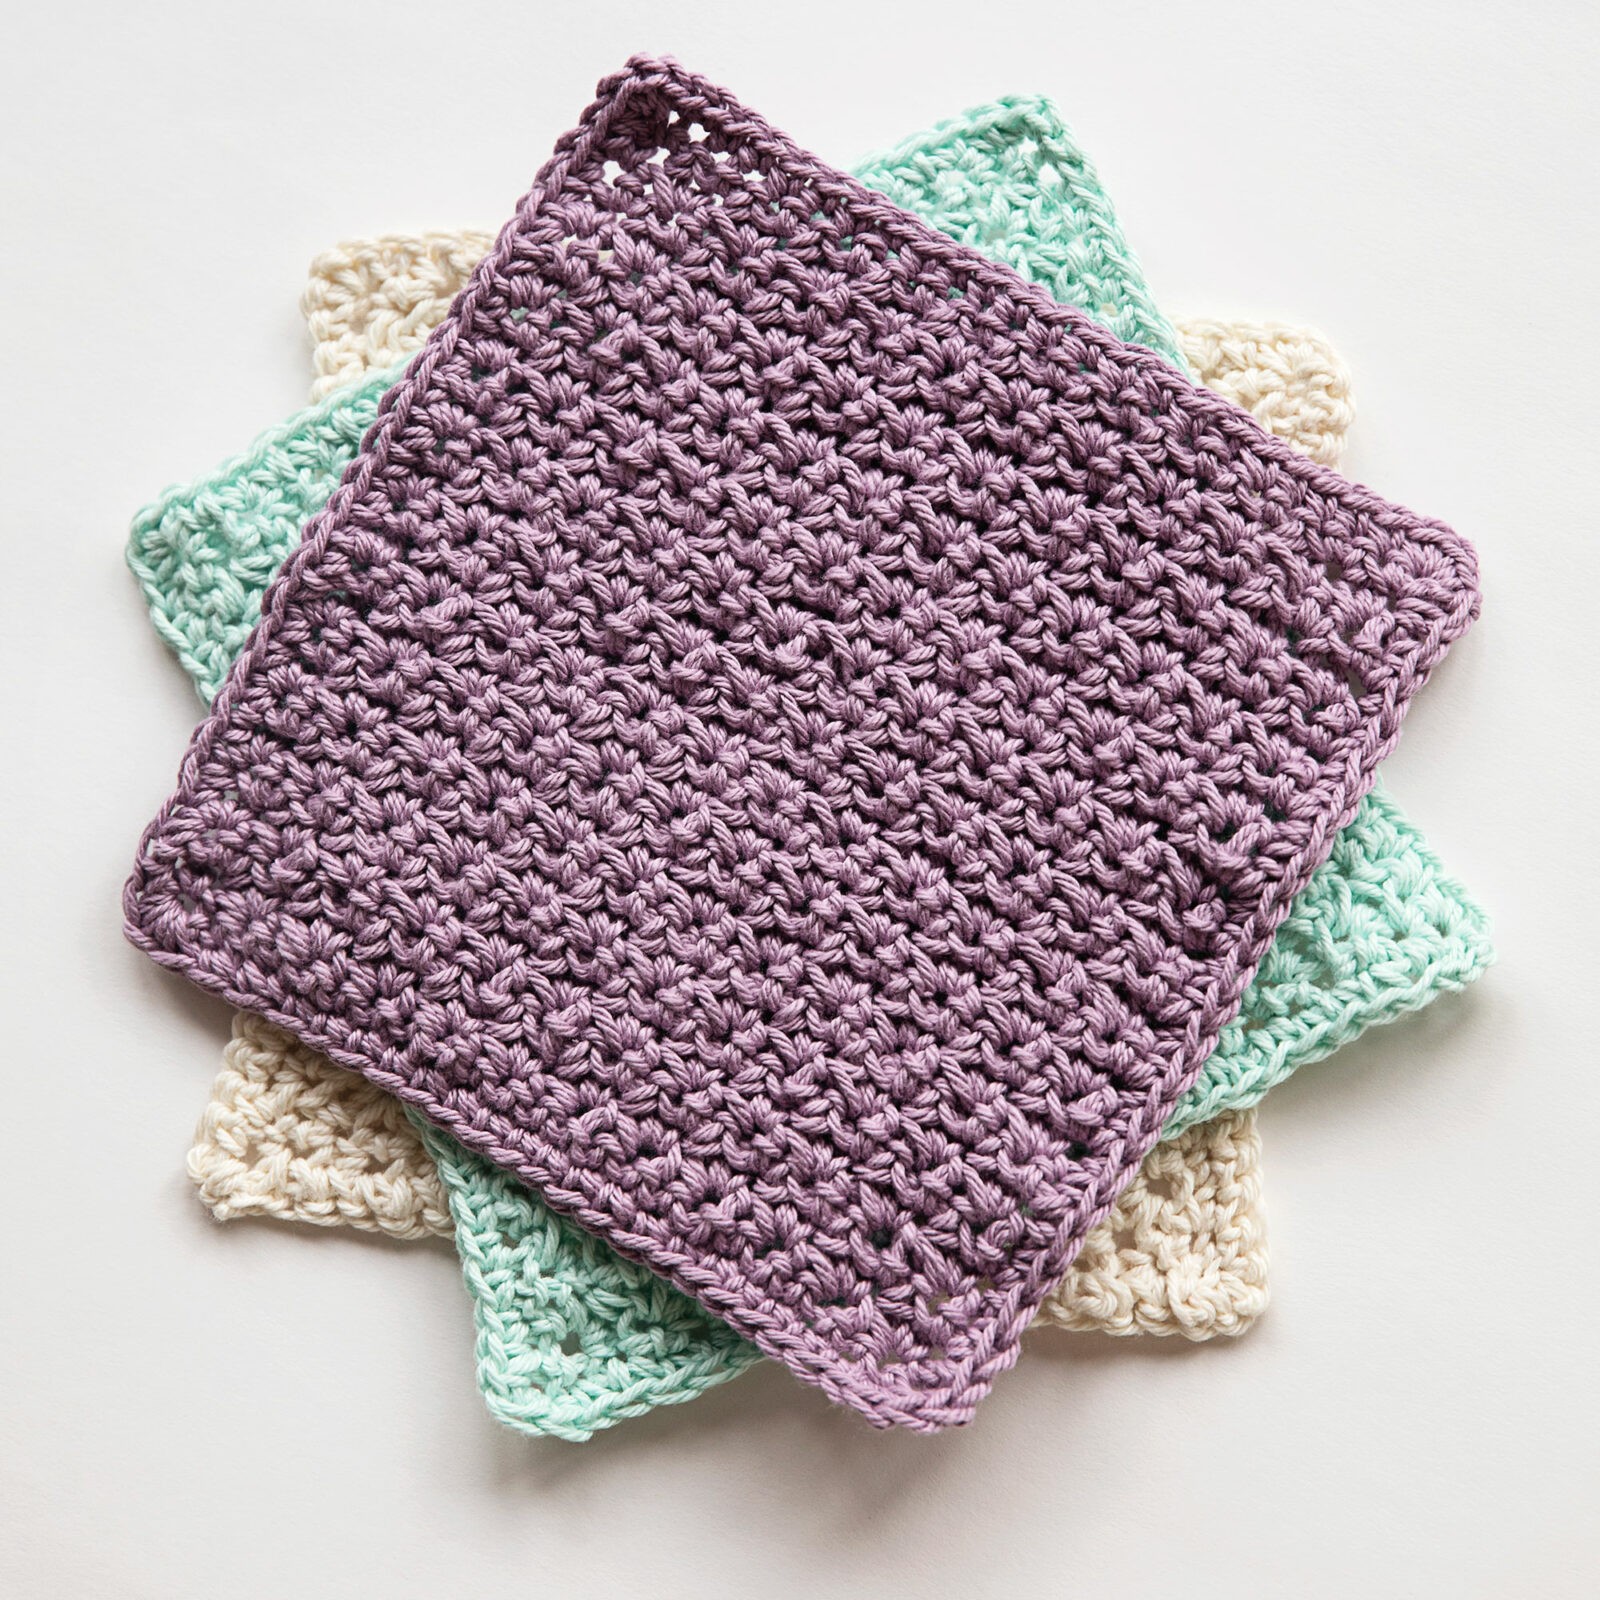 Dishie Crochet Patterns - Easy Crochet Patterns